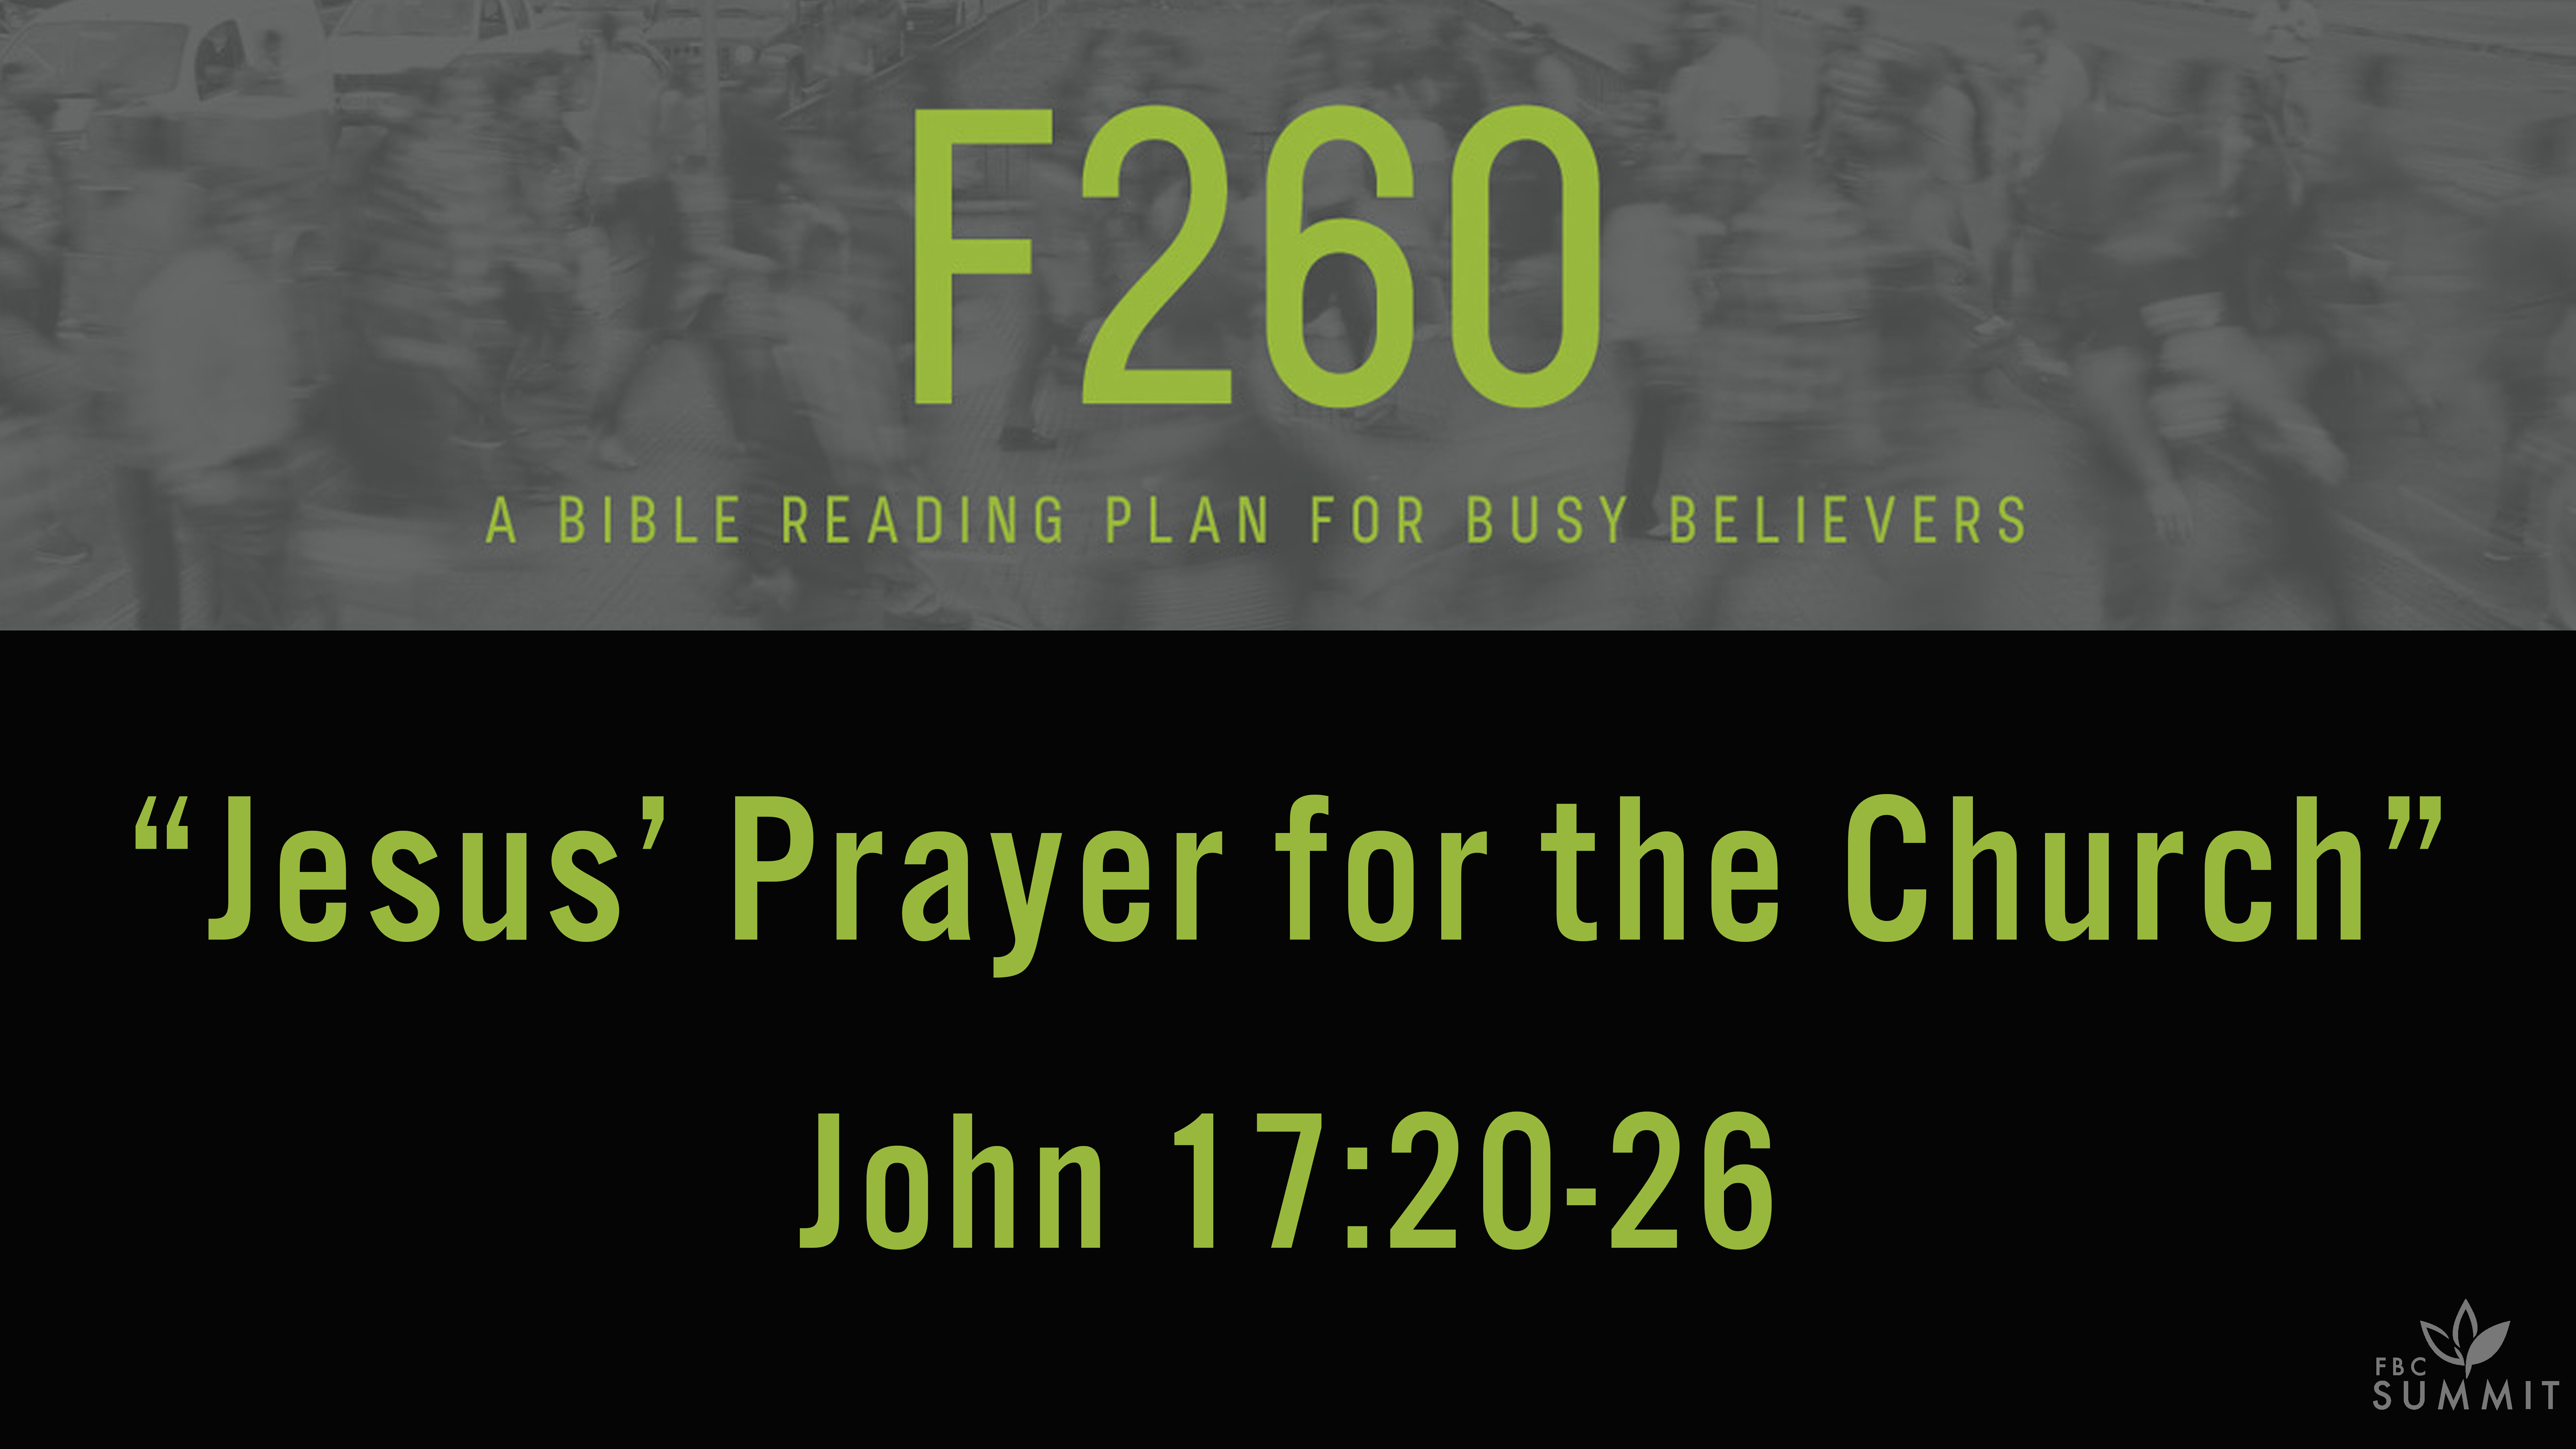 F260: "Jesus' Prayer for the Church" John 17:20-26